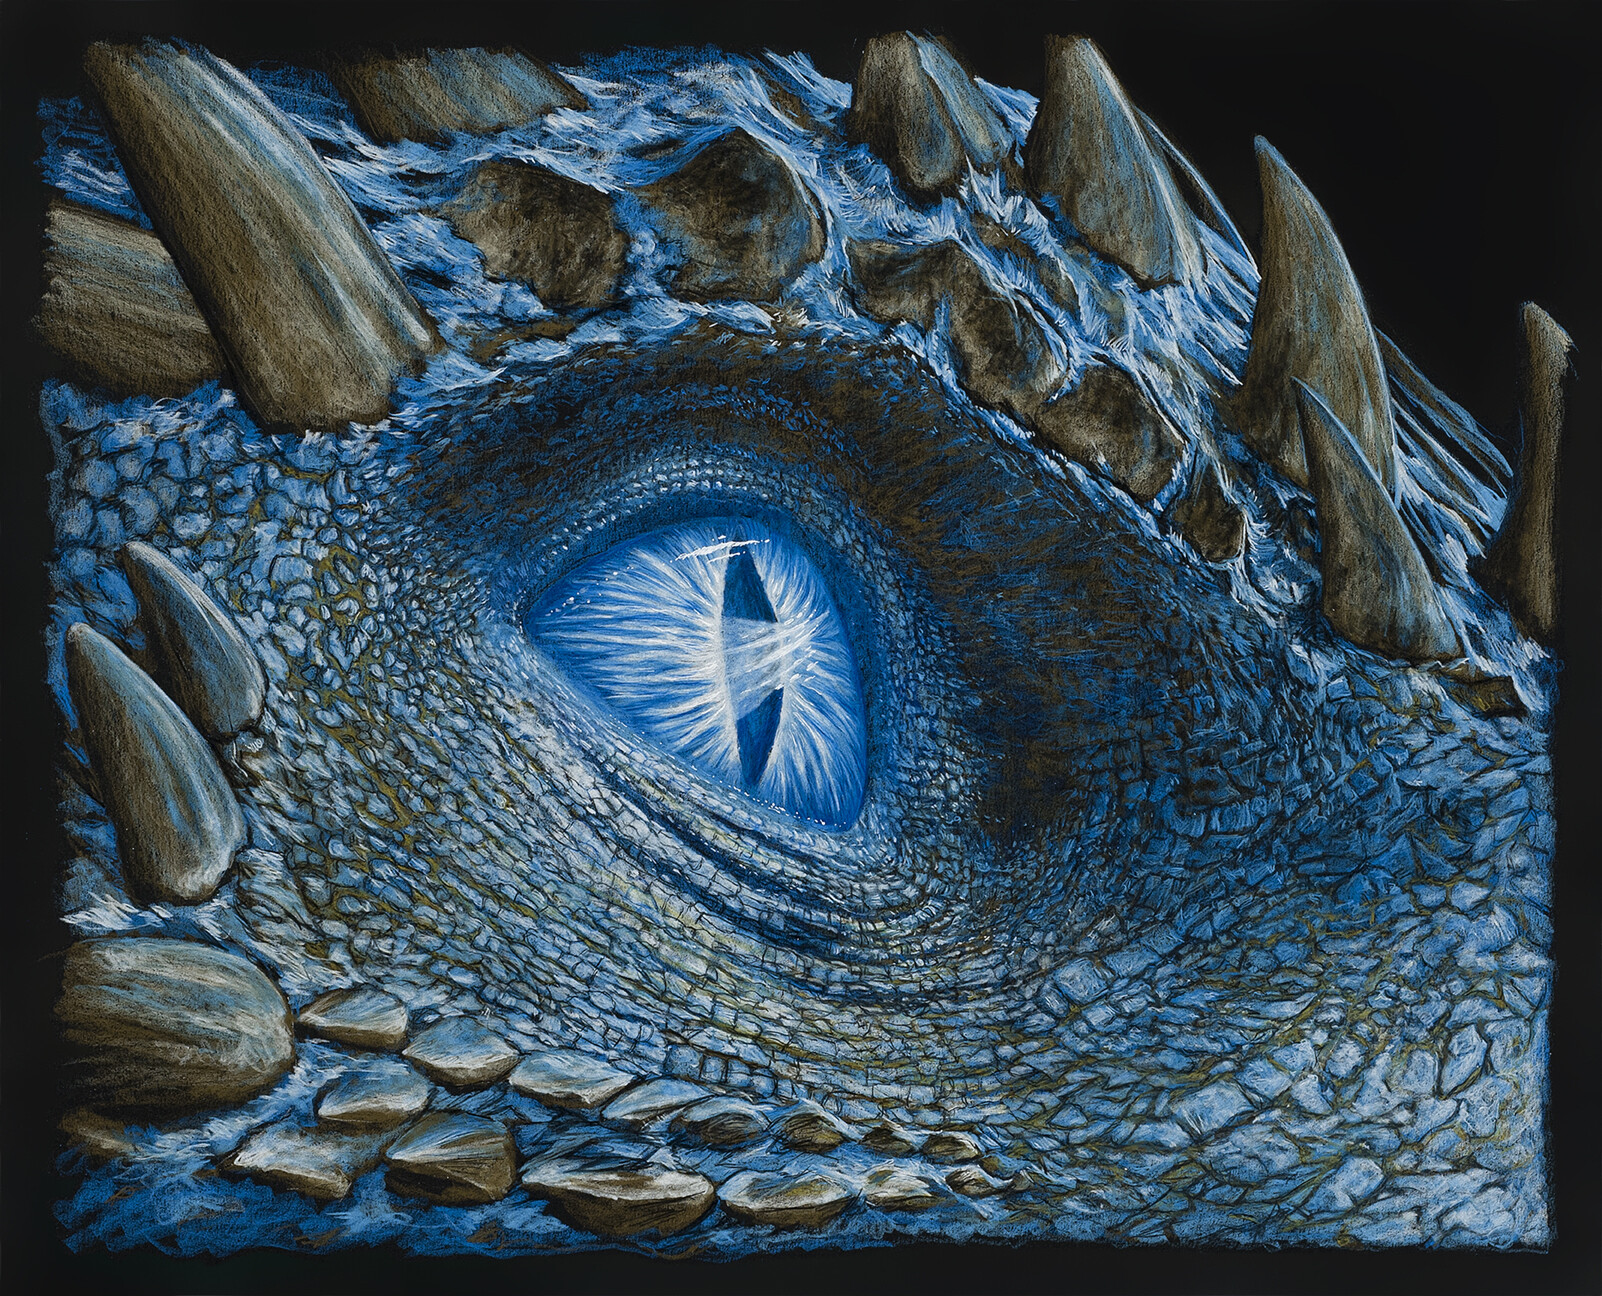 eye of the dragon game